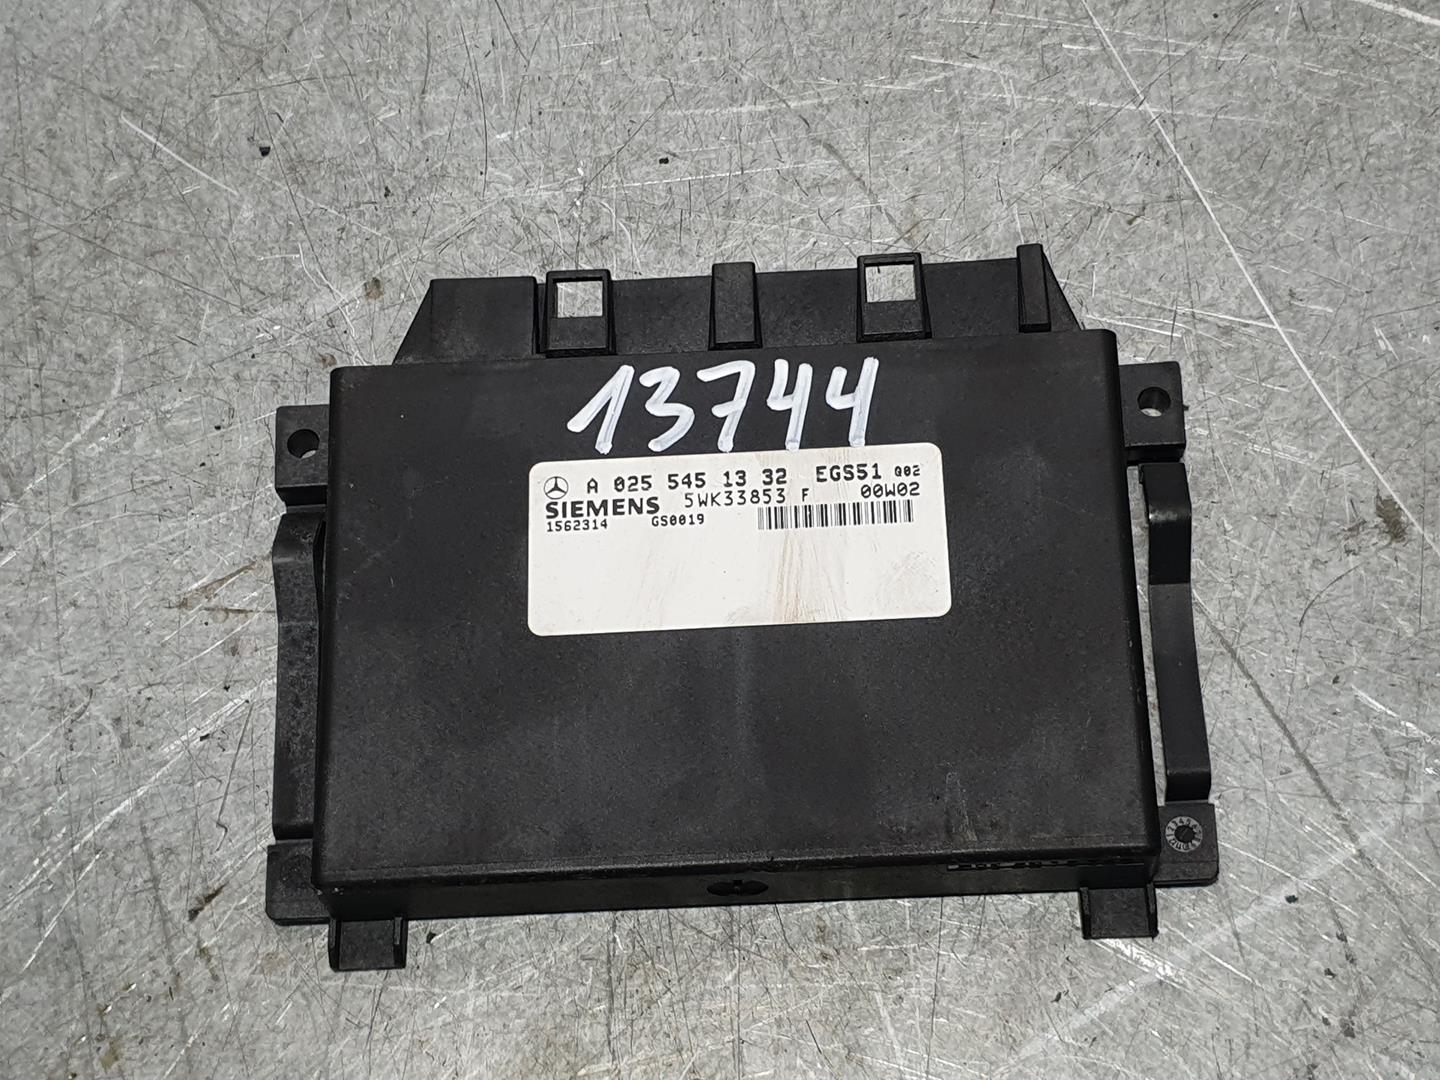 MERCEDES-BENZ E-Class W210 (1995-2002) Gearbox Control Unit A0255451332, 5WK33853, SIEMENS 18715749